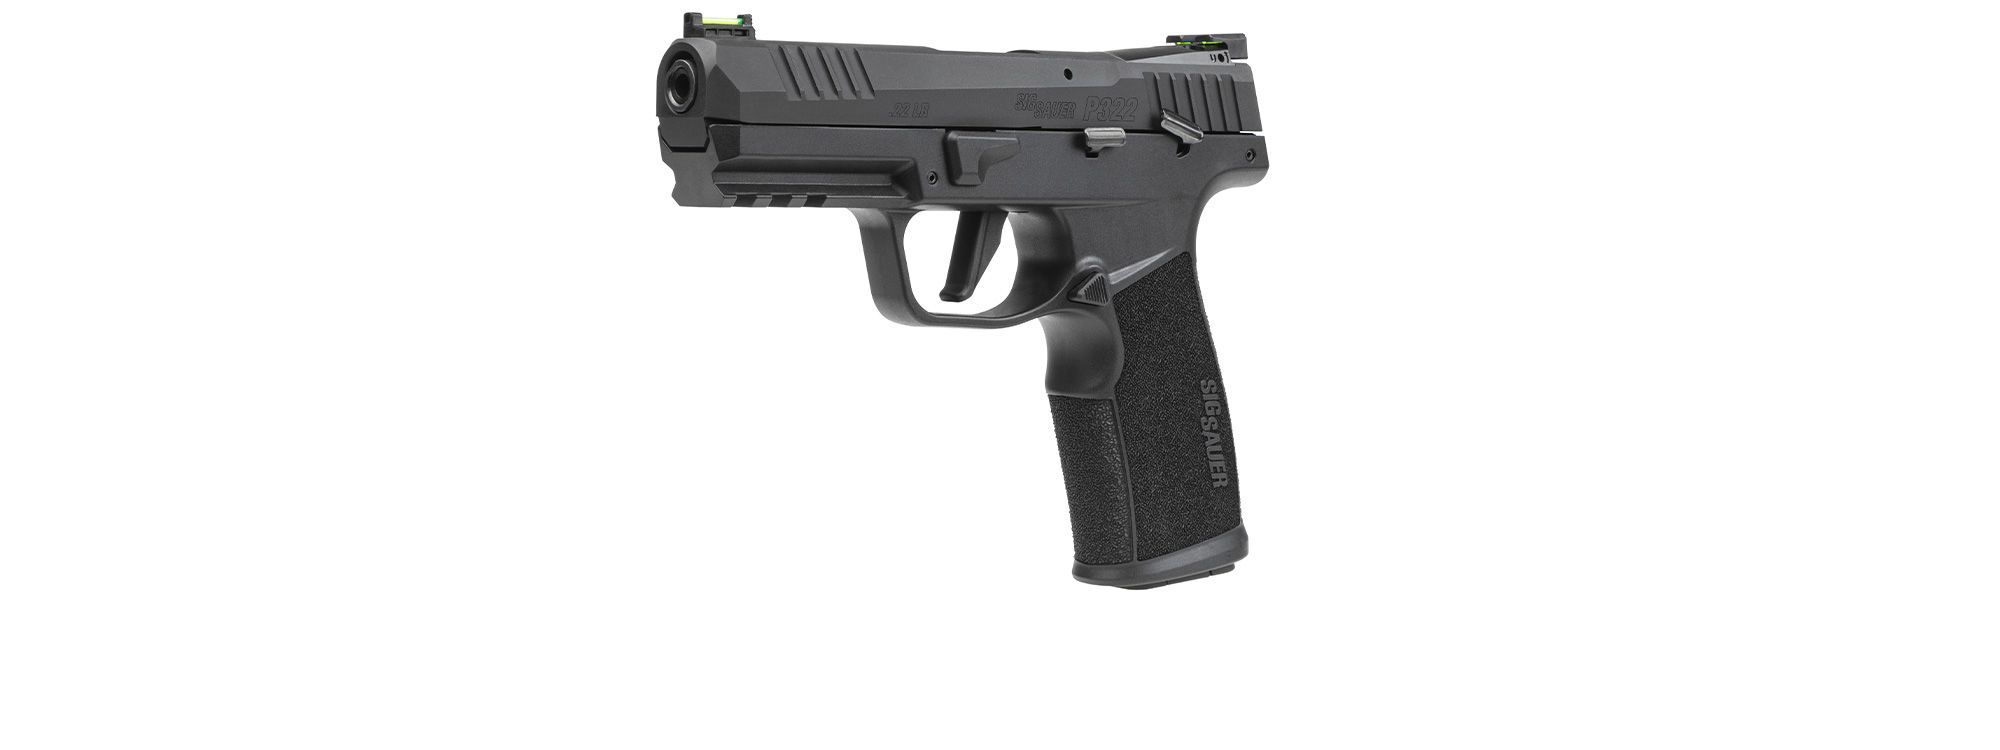 SIG SAUER Launches New P322 Rimfire Pistol